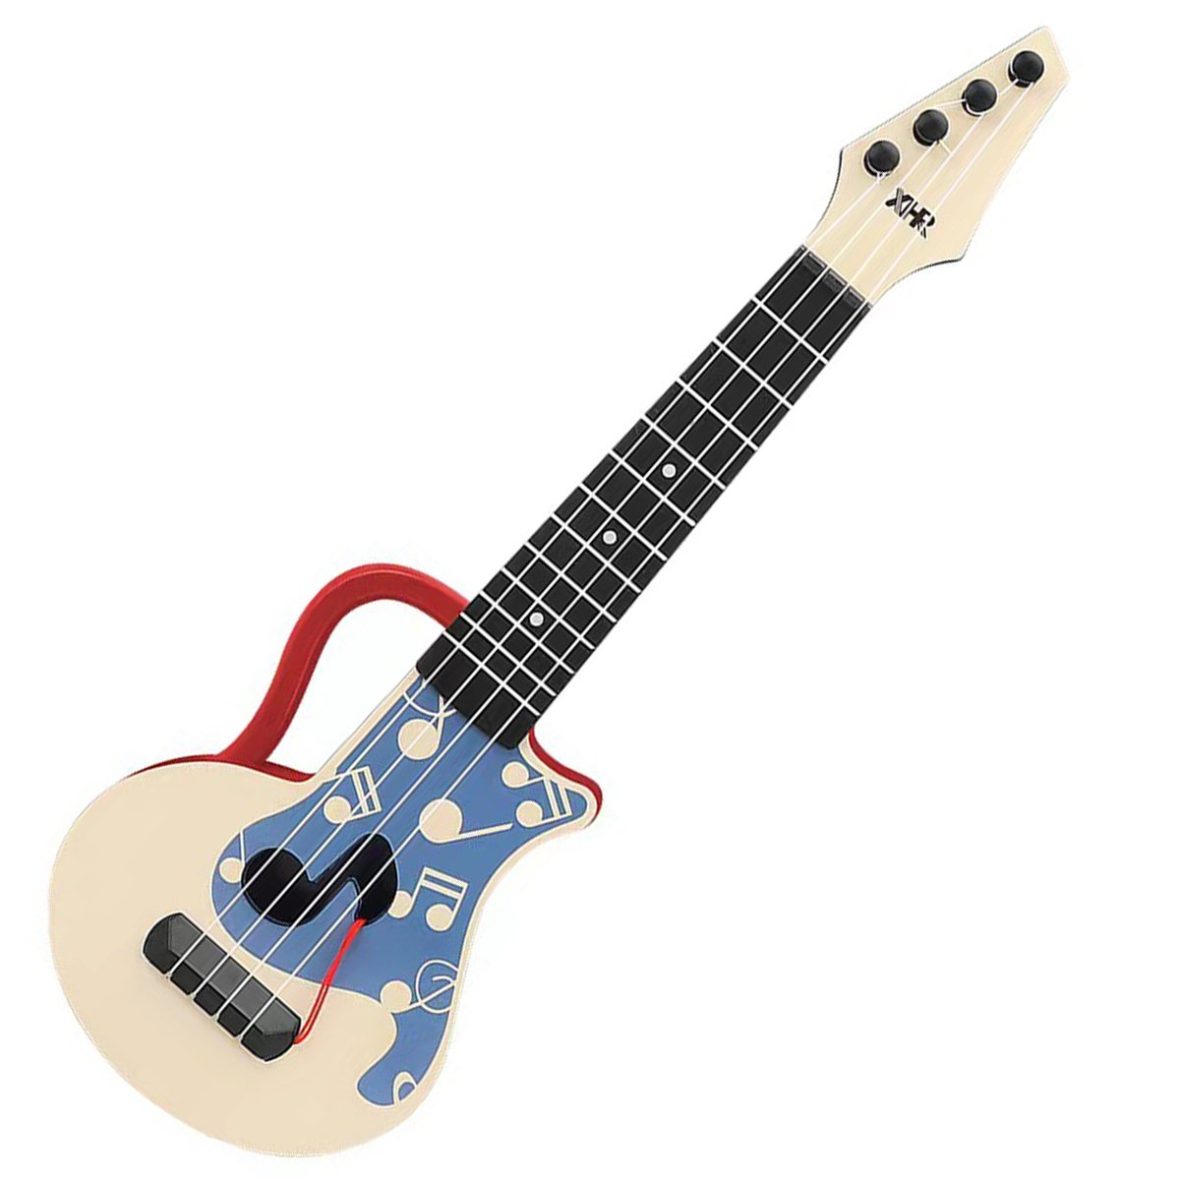 Ukulele Guitar Toy Musical Instrument for Kids